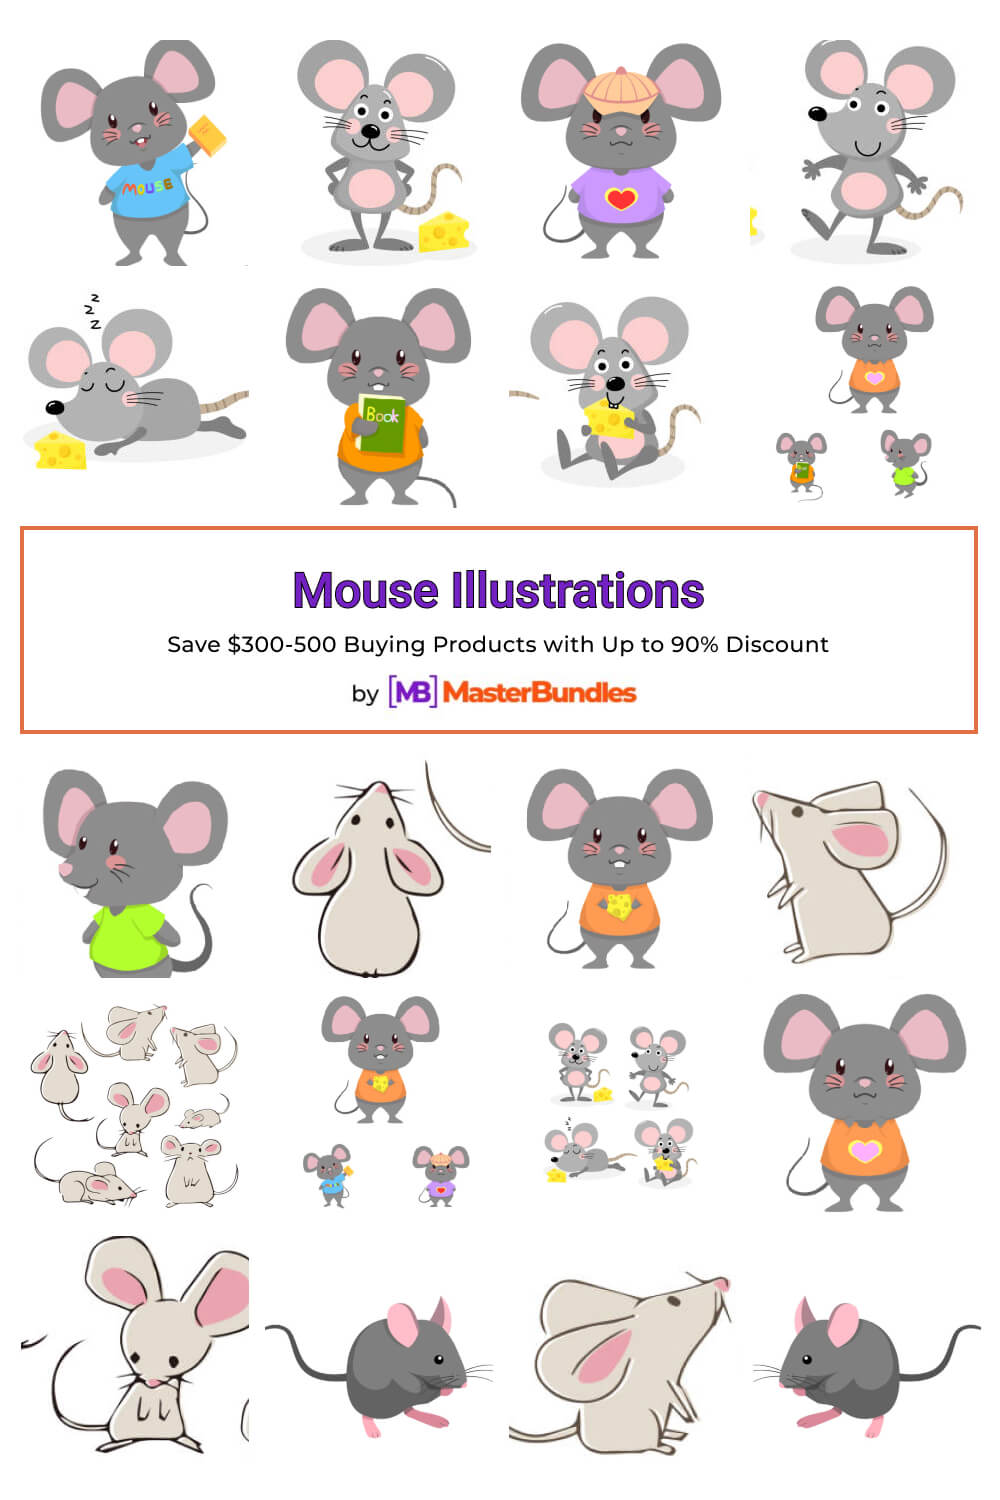 mouse illustrations pinterest image.